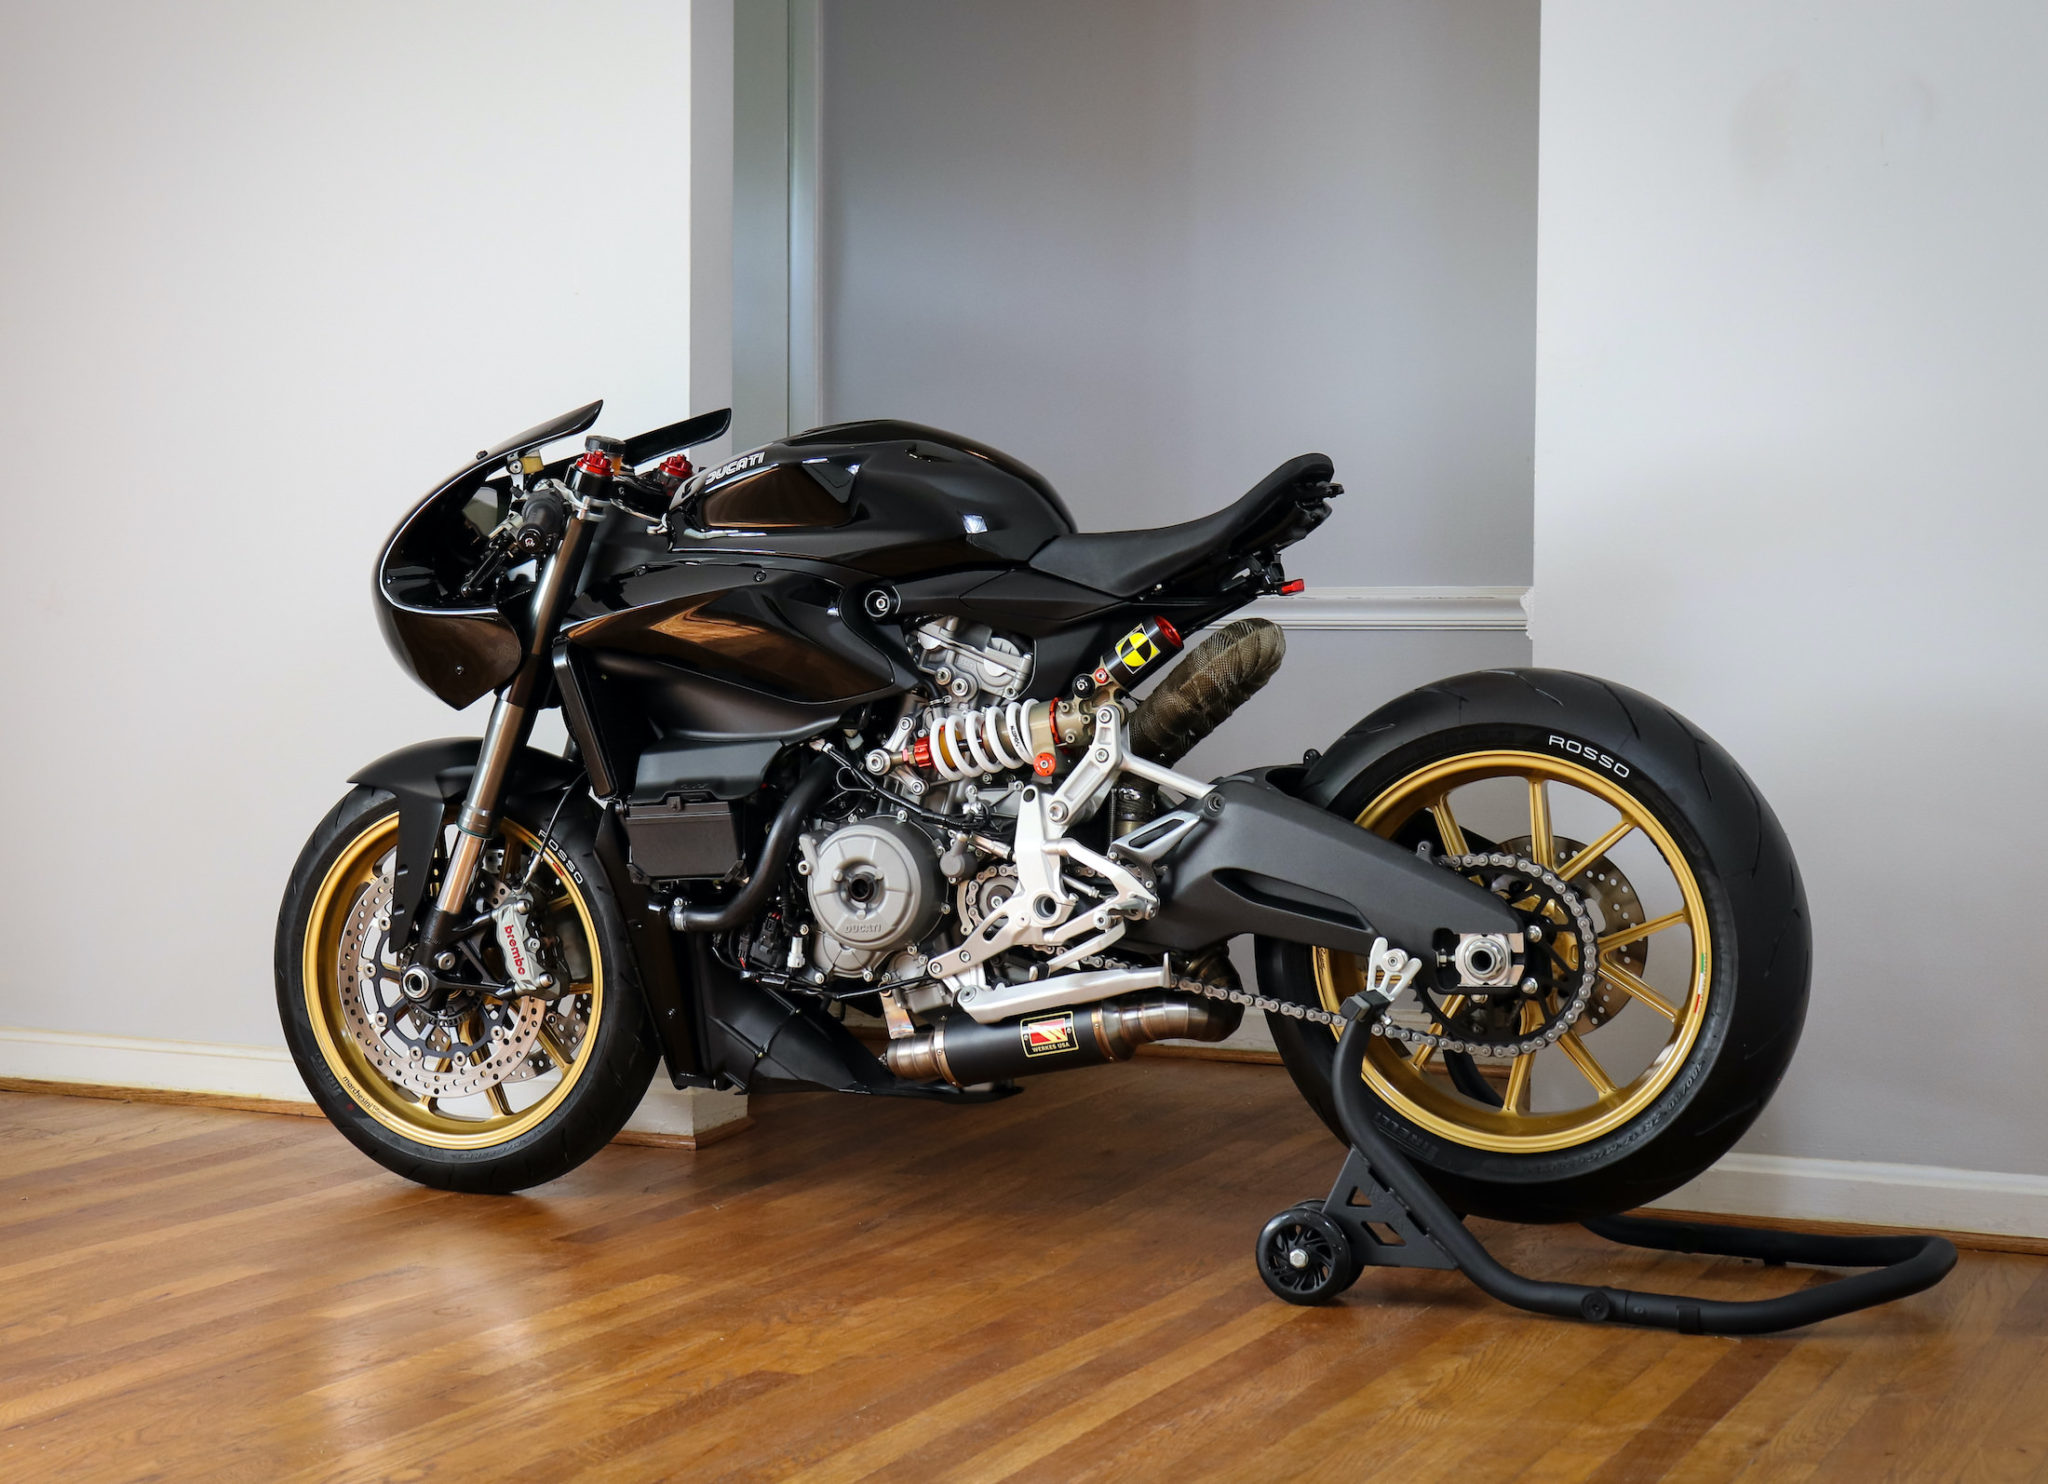 This Custom Ducati 959 Panigale Looks Ravishing Drivemag Riders